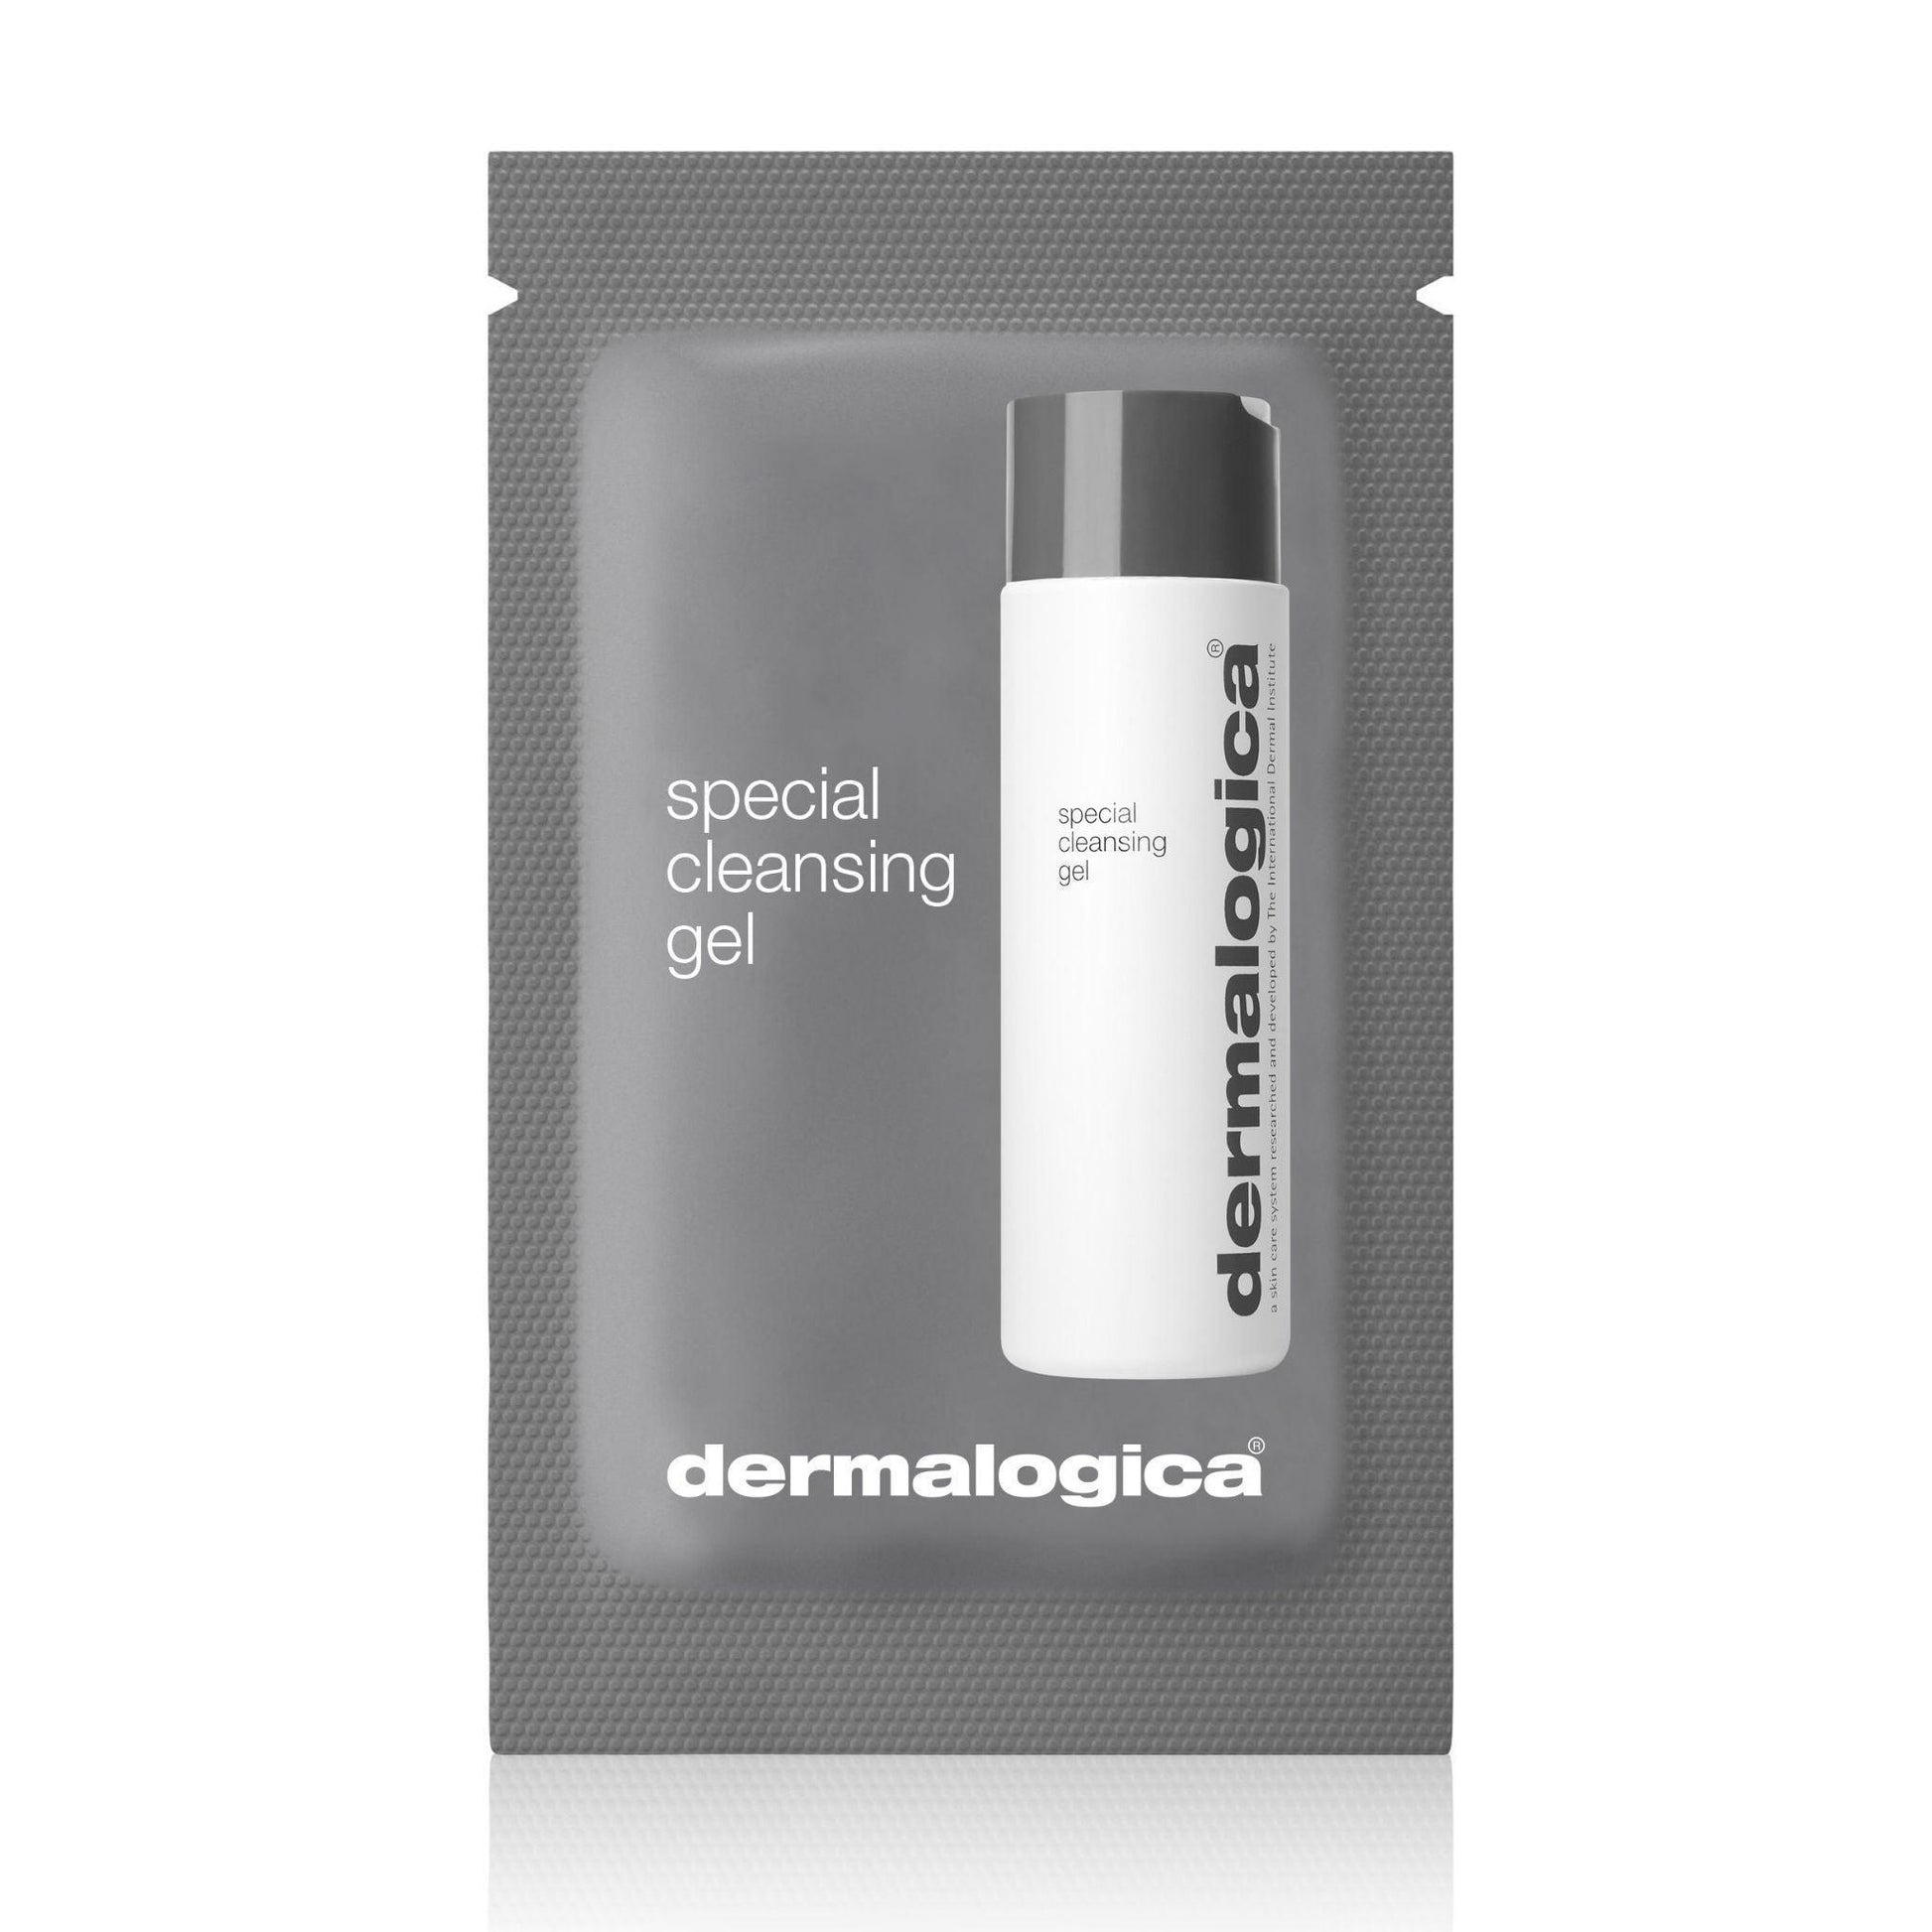 special cleansing gel (sample) - Dermalogica Singapore